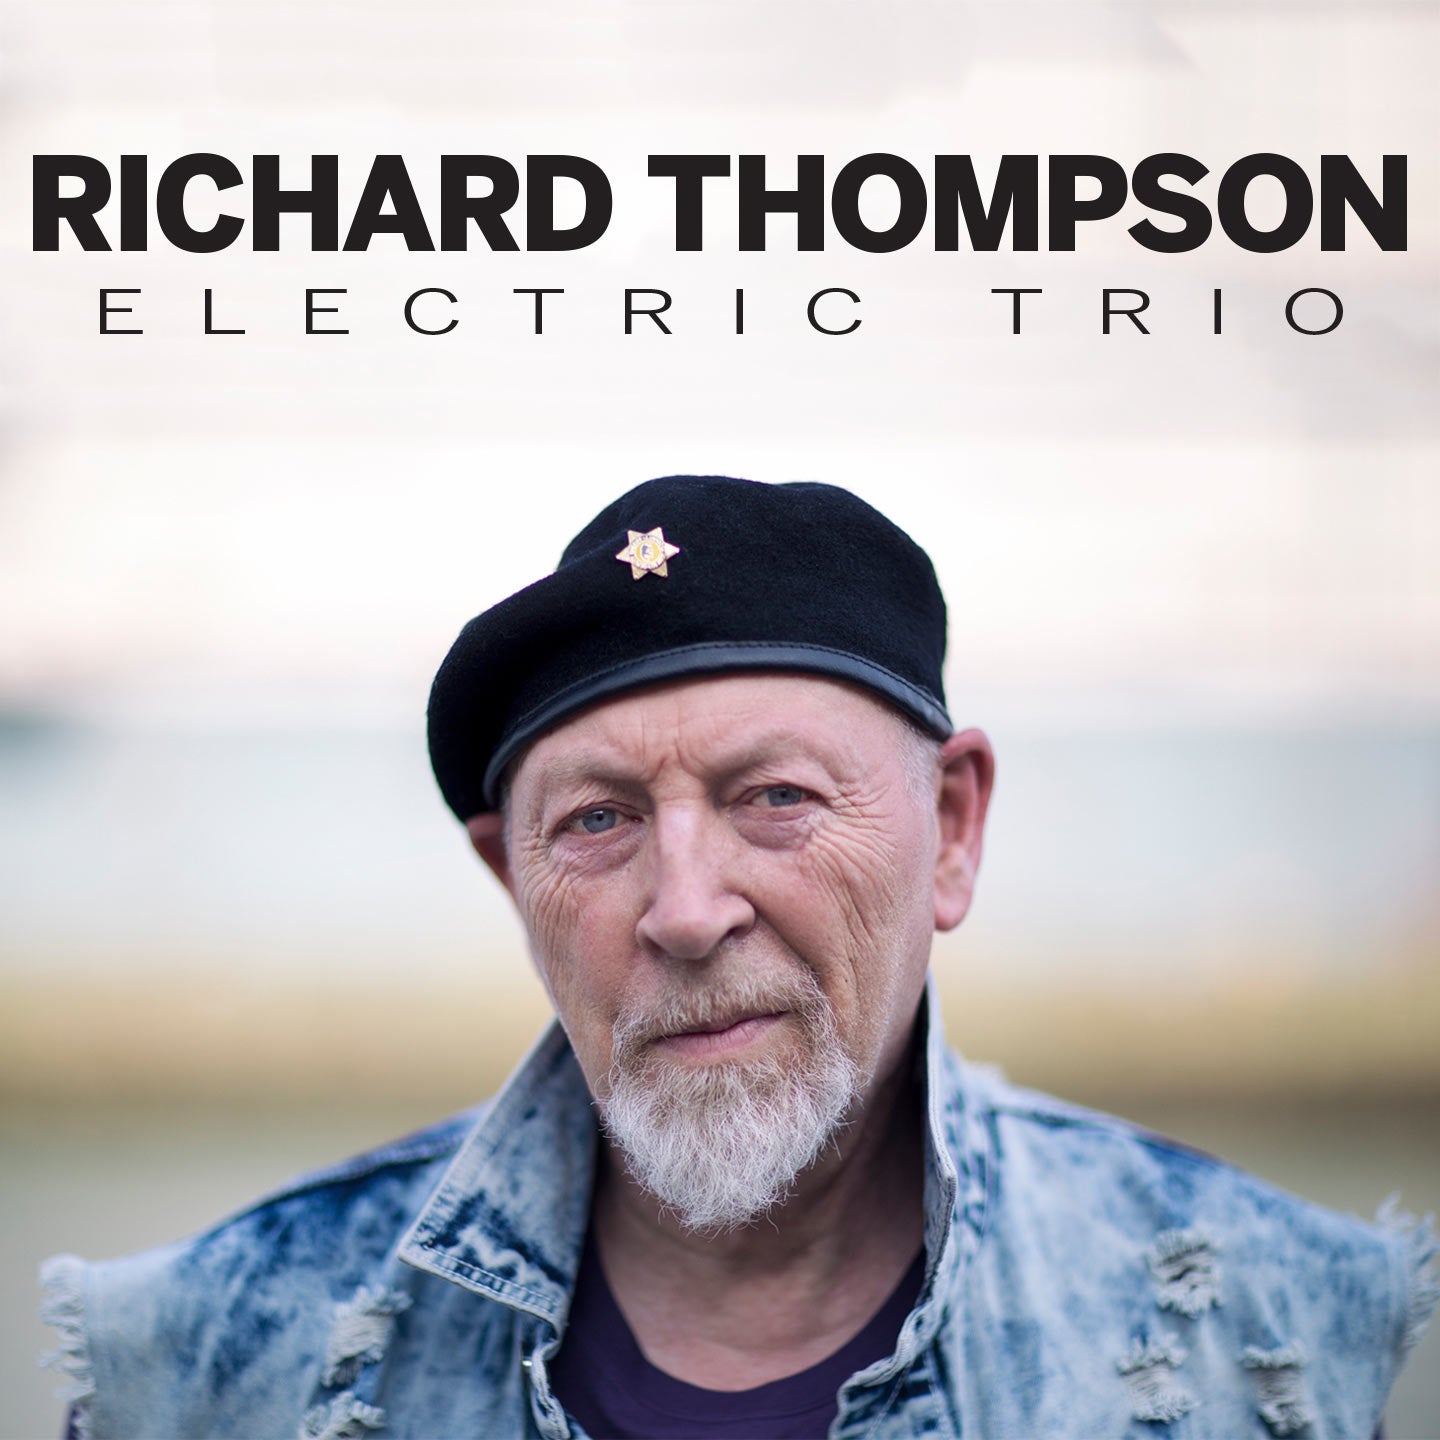 Richard Thompson Electric Trio